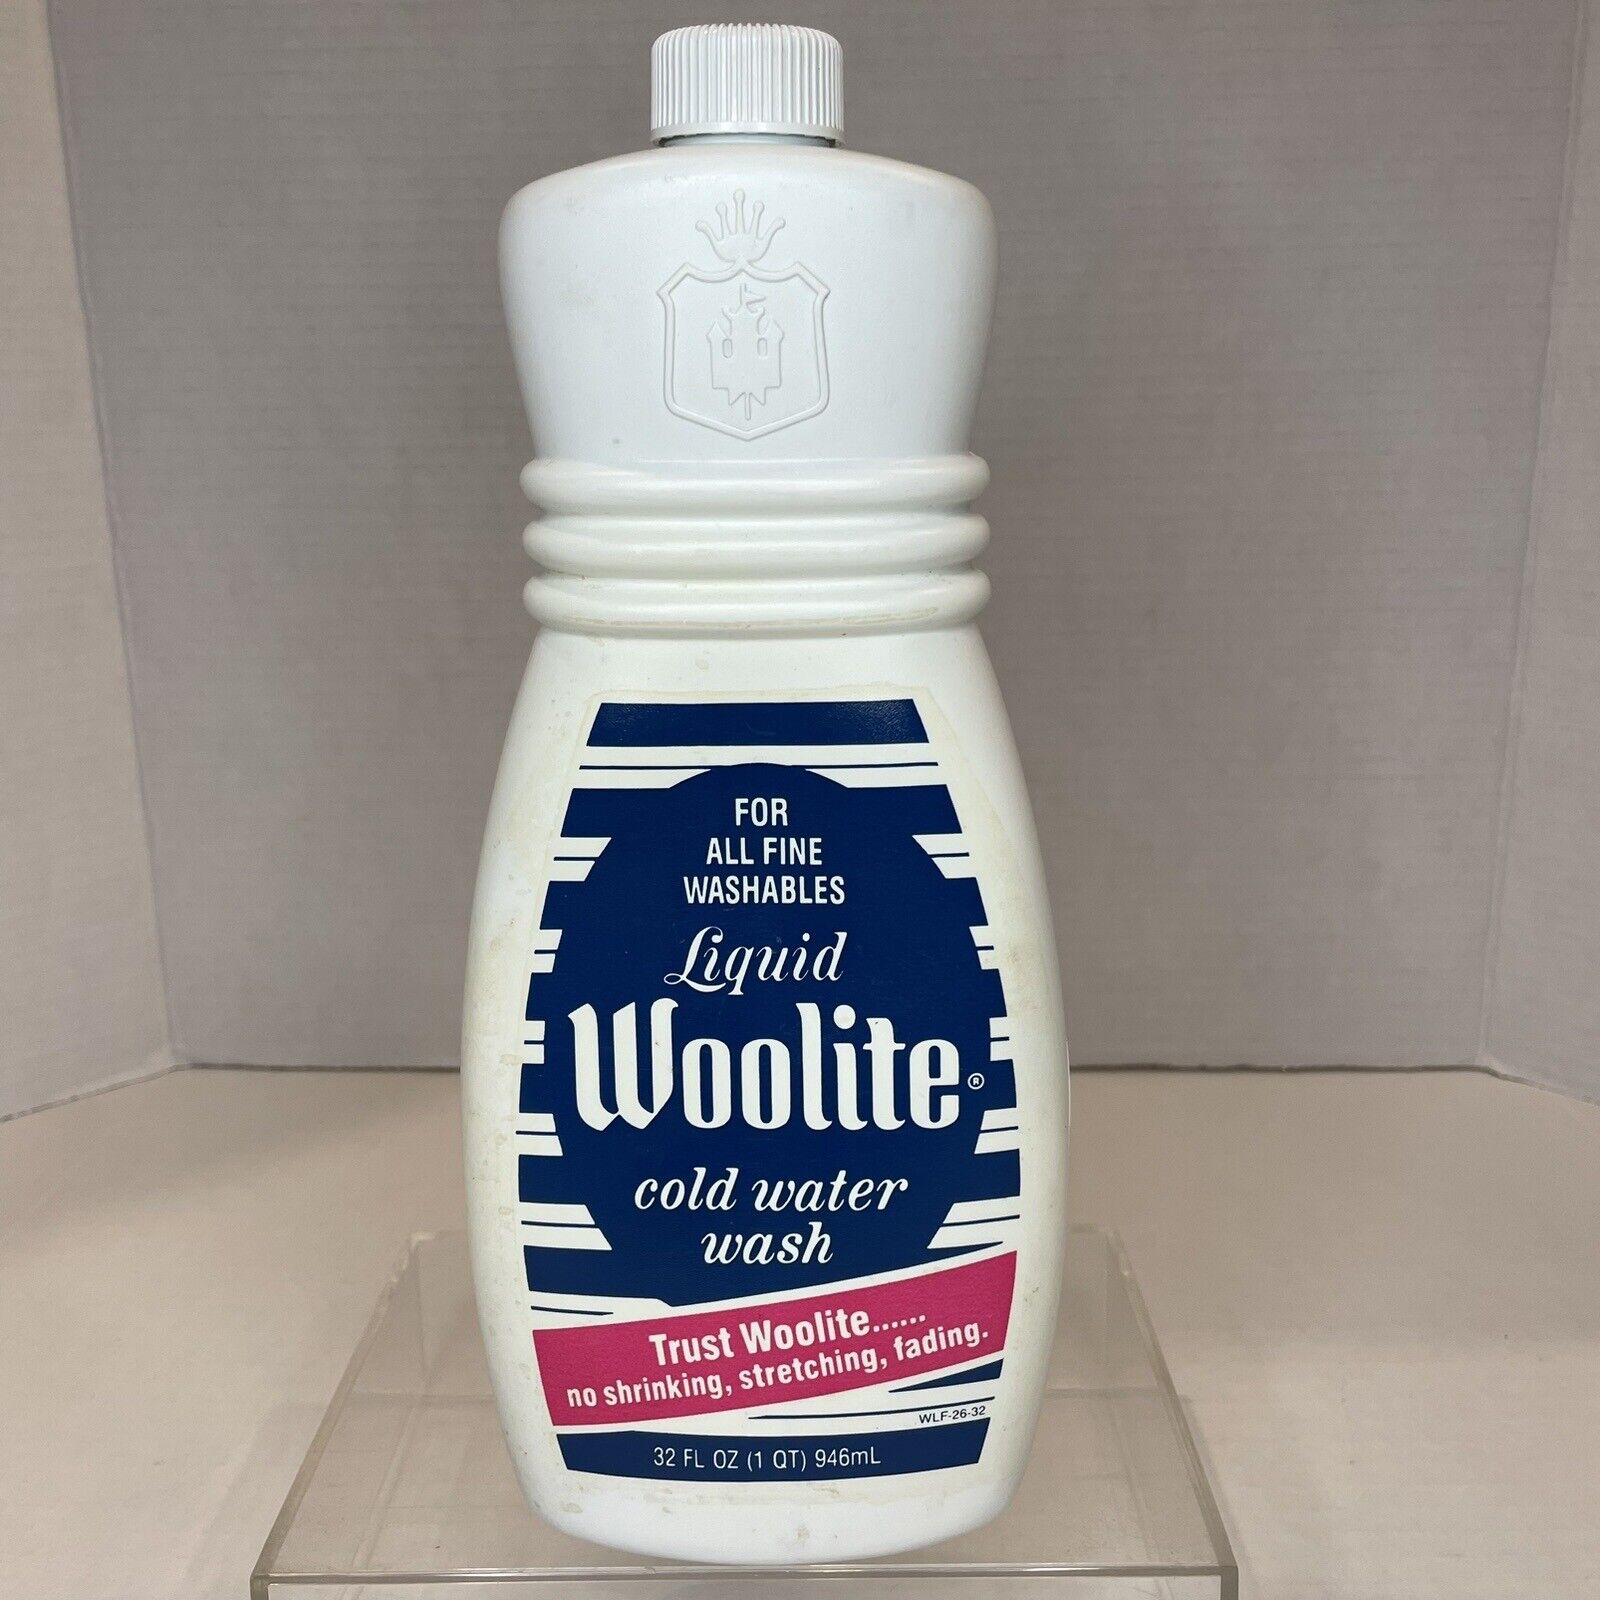 Vintage 1980s 32oz Liquid Woolite Cold Water Wash Bottle 85% Full ~Prop~Use